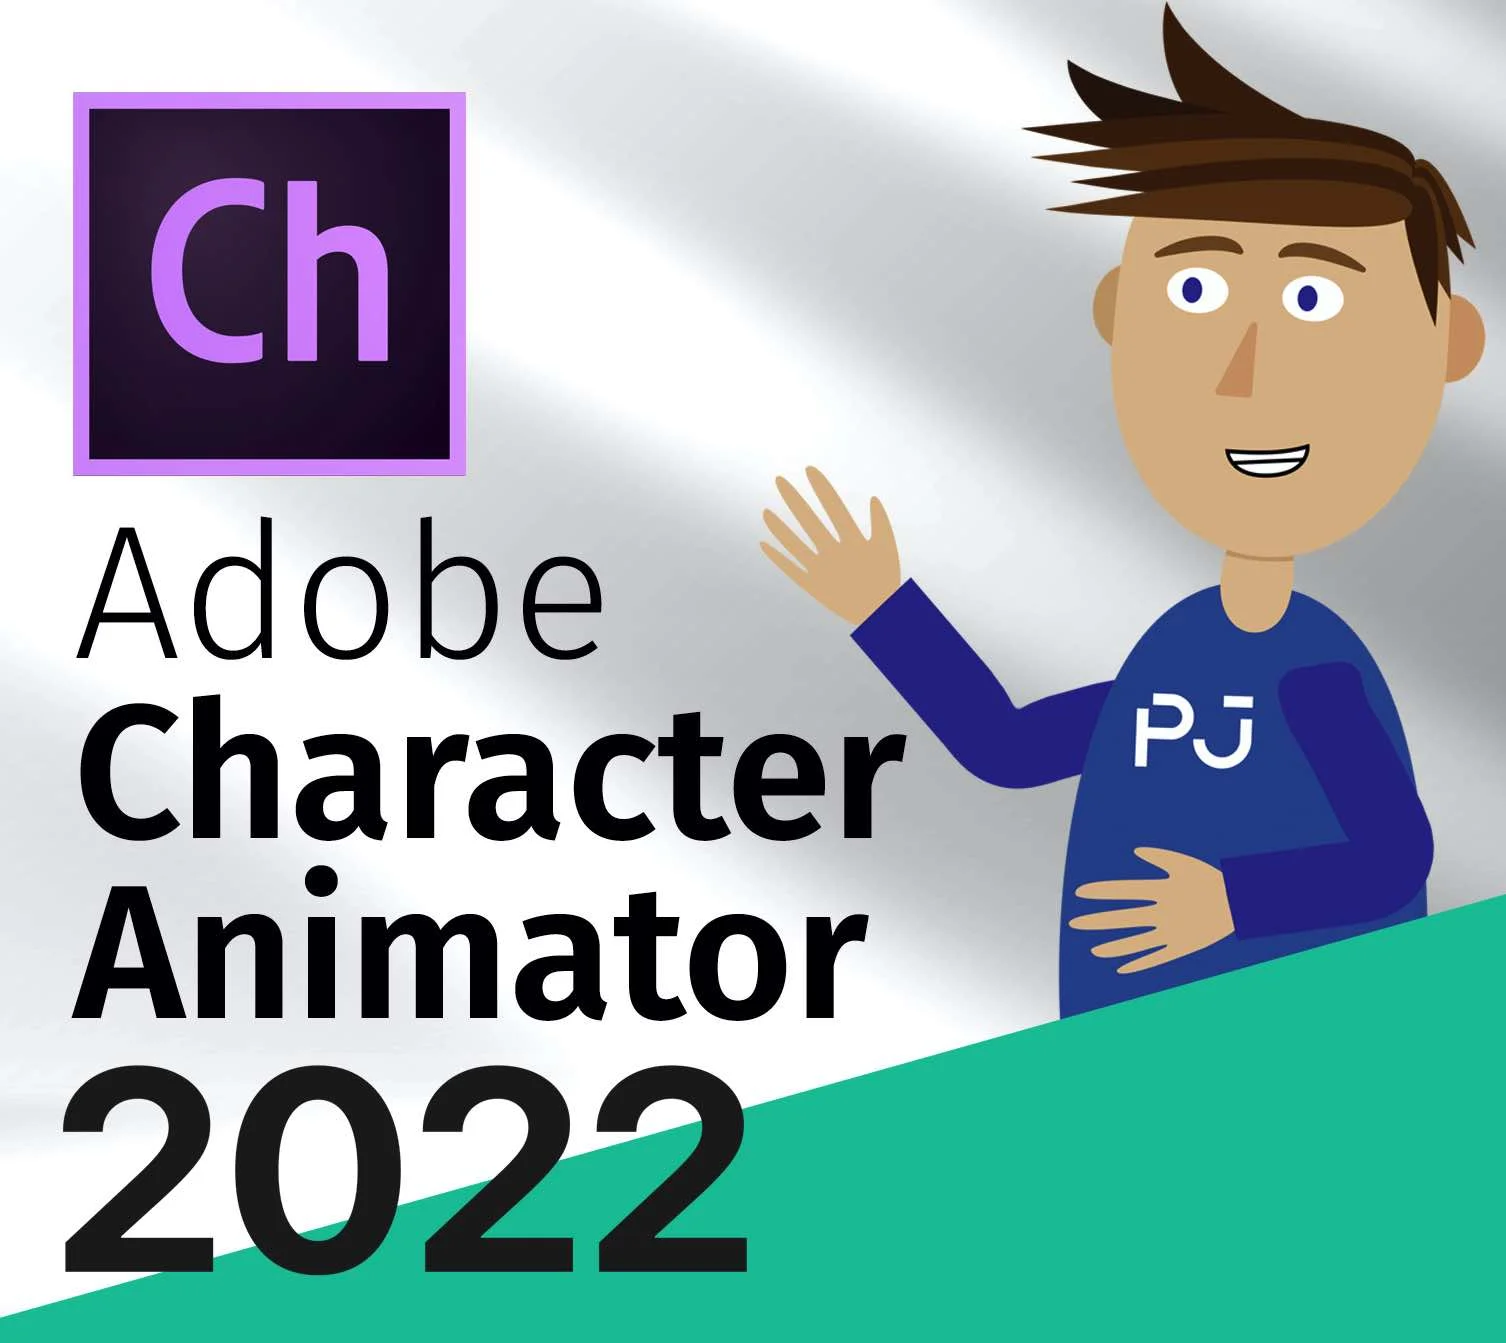 Adobe character animator free download